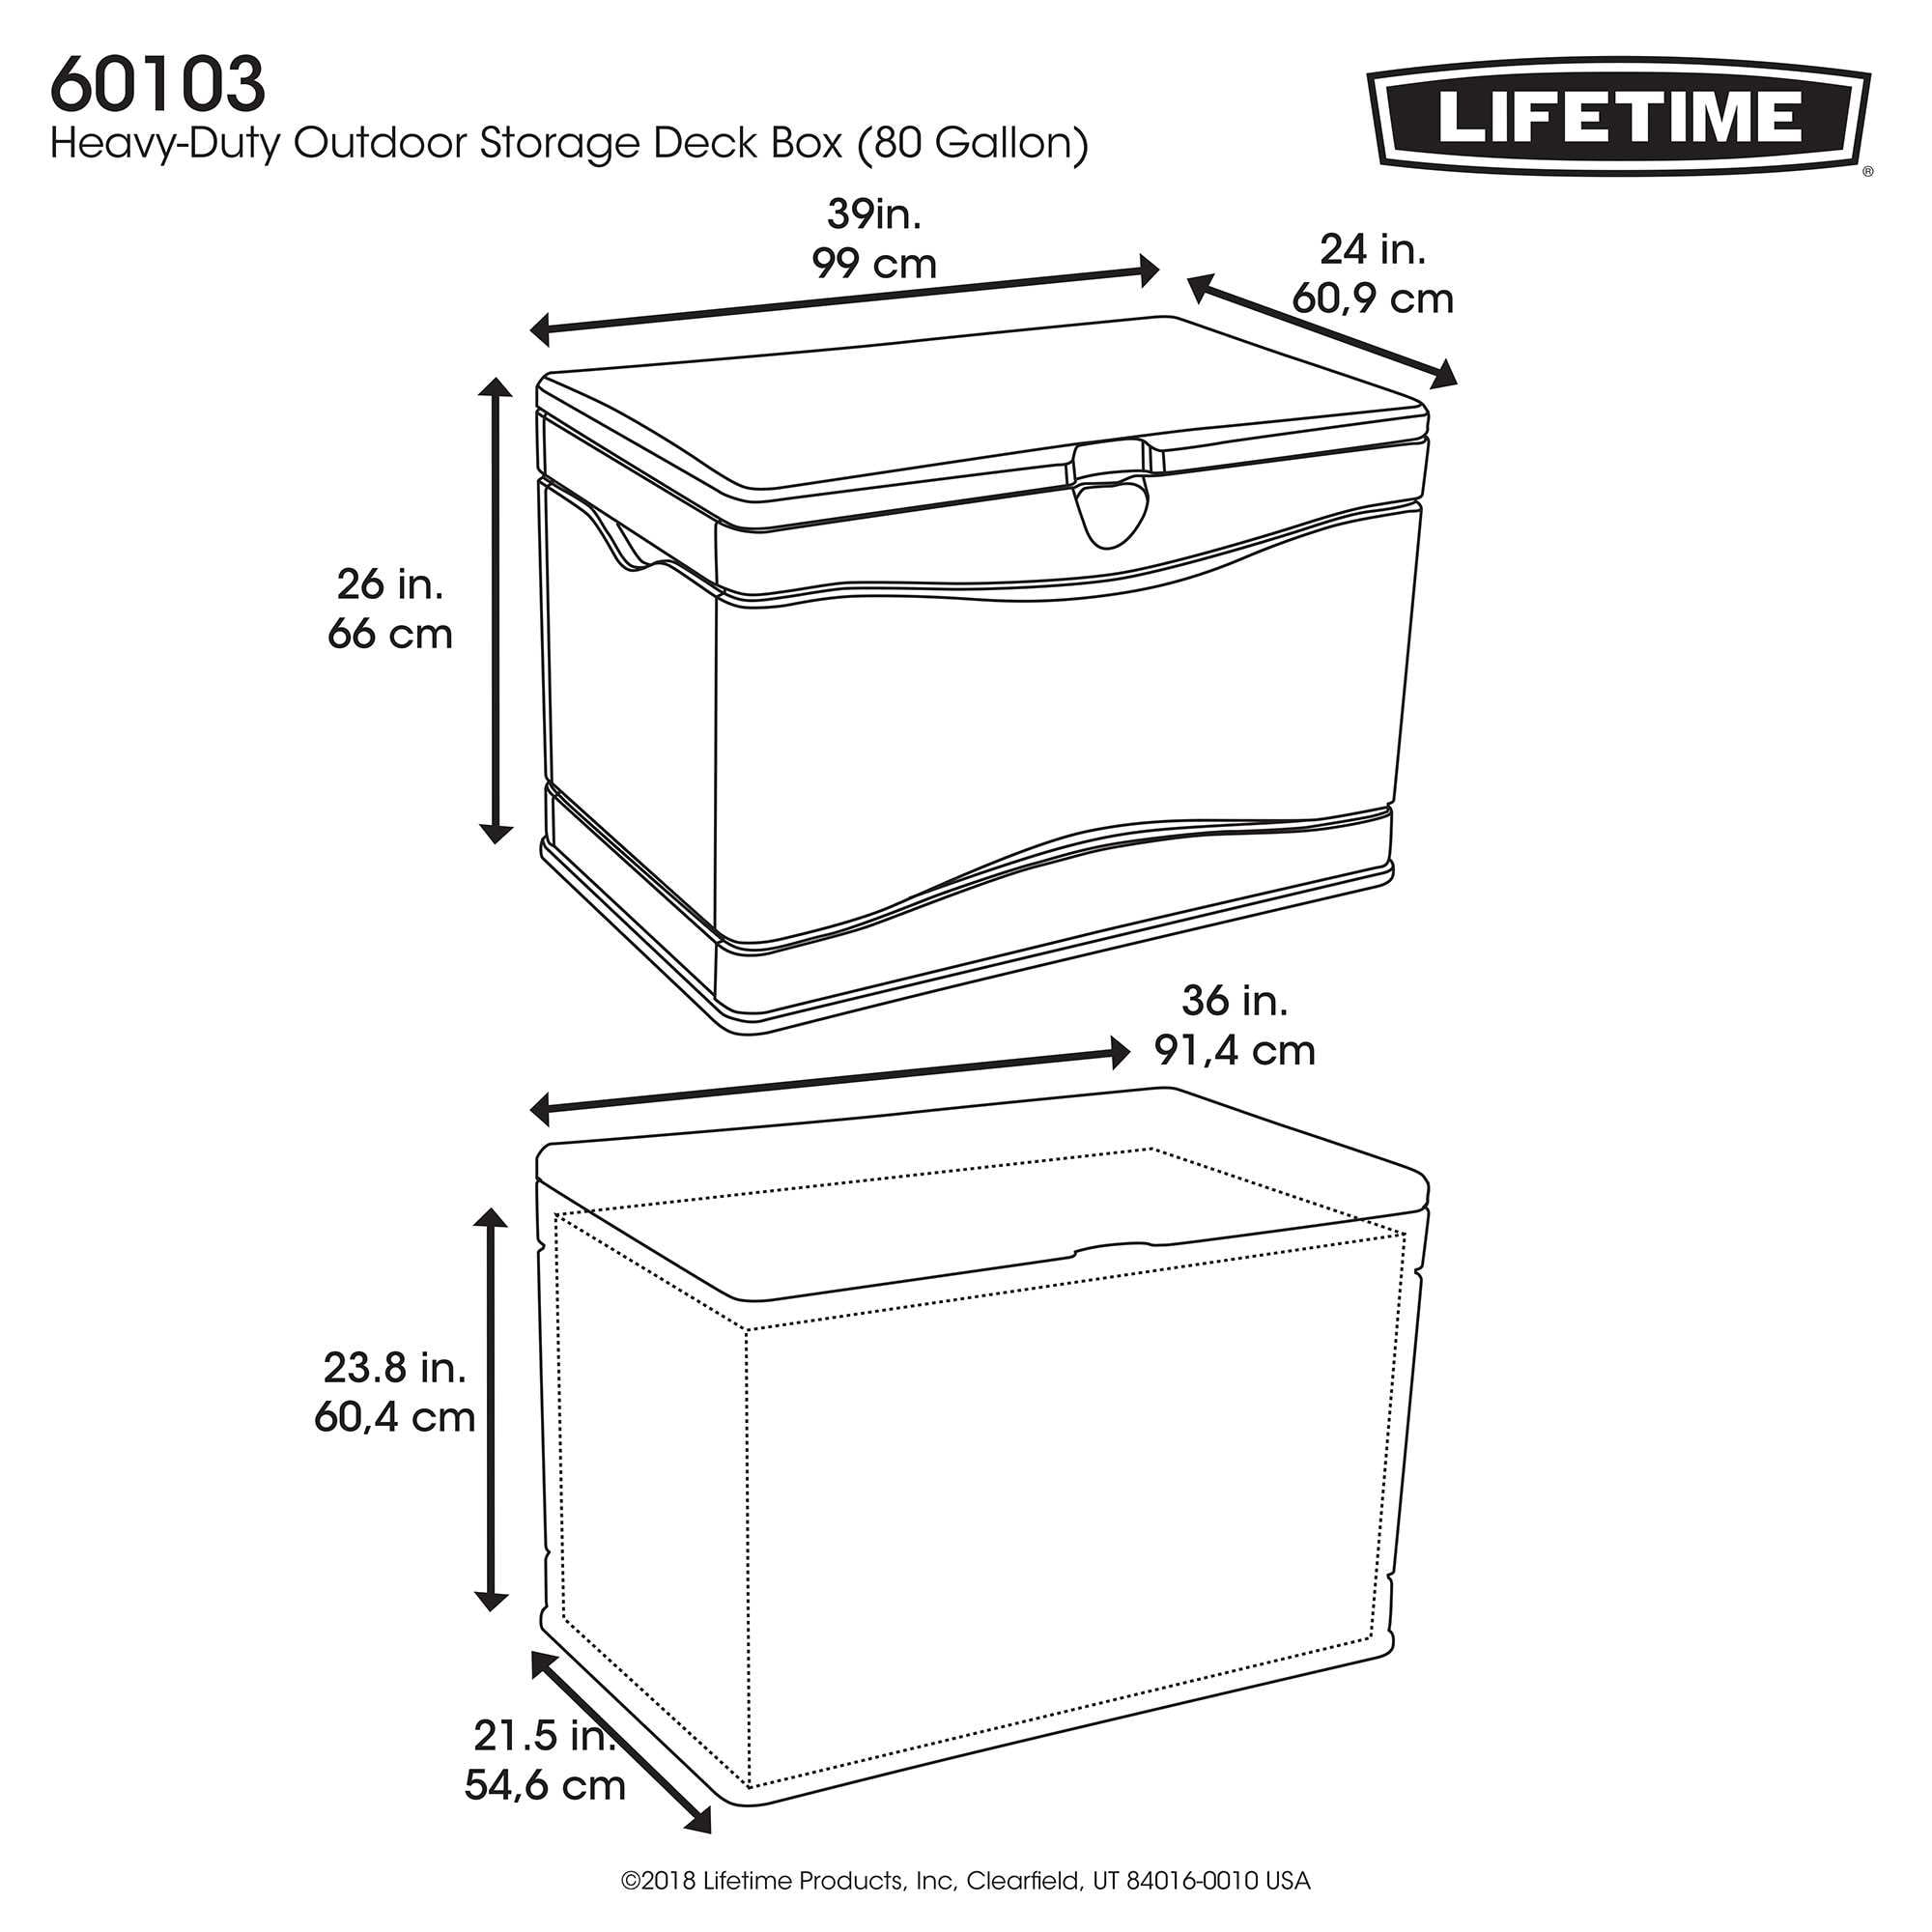 Lifetime Outdoor Storage 80 Gallon Deck Box